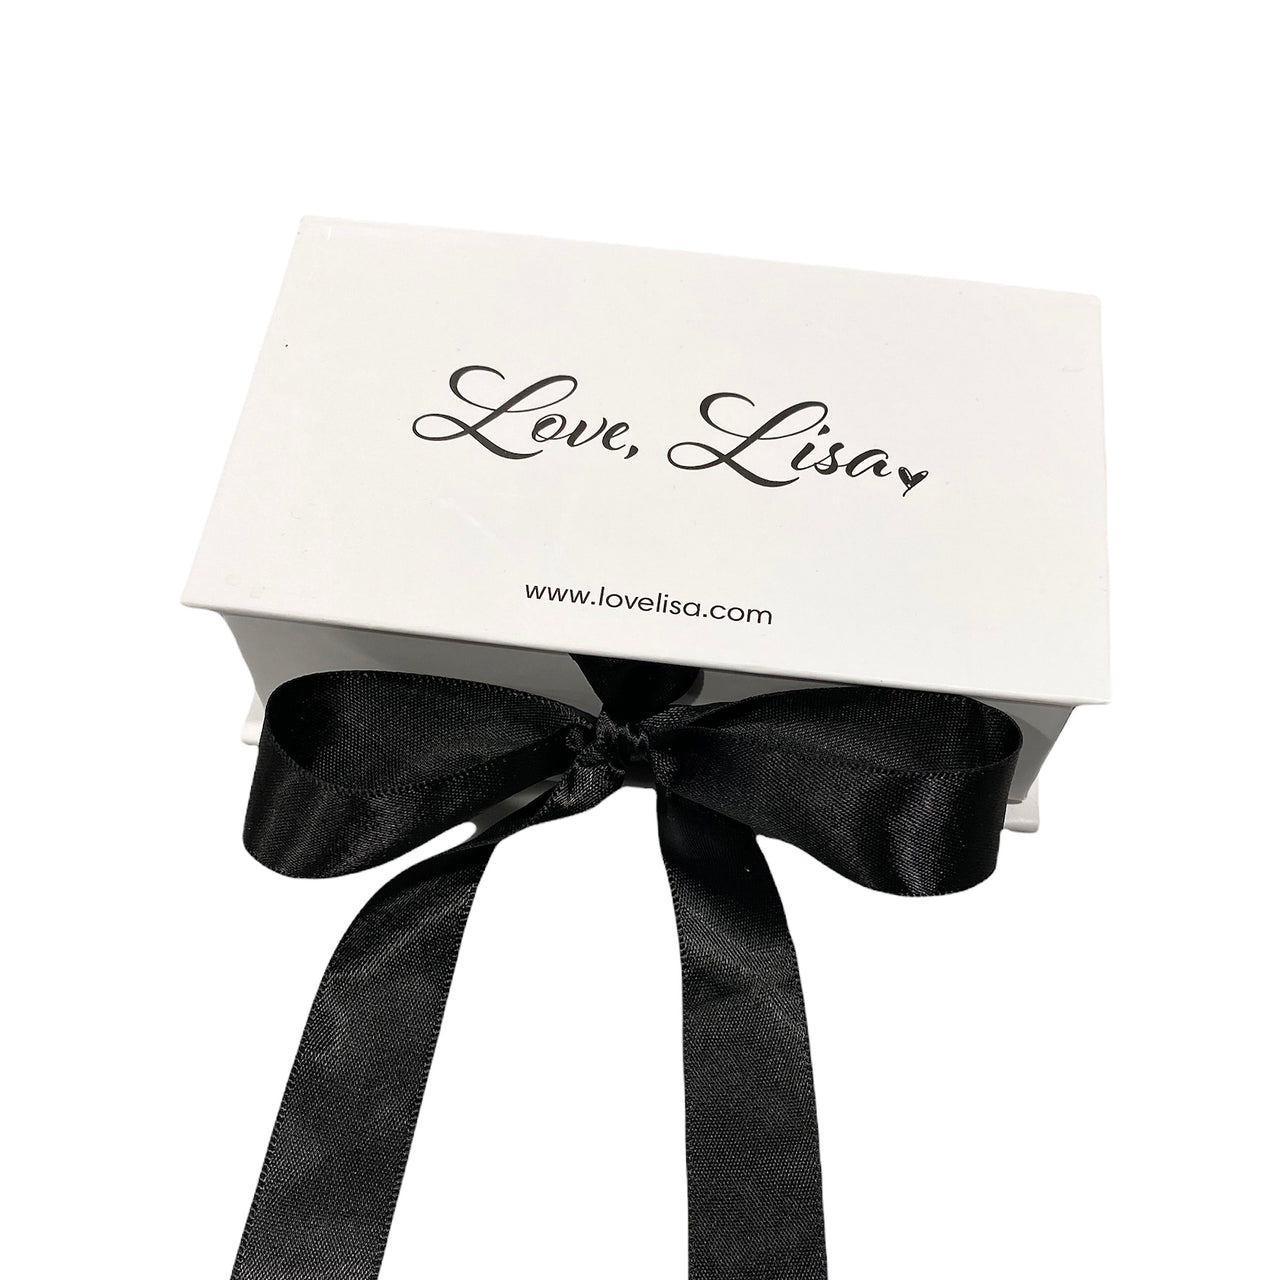 Love, Lisa Gift Box